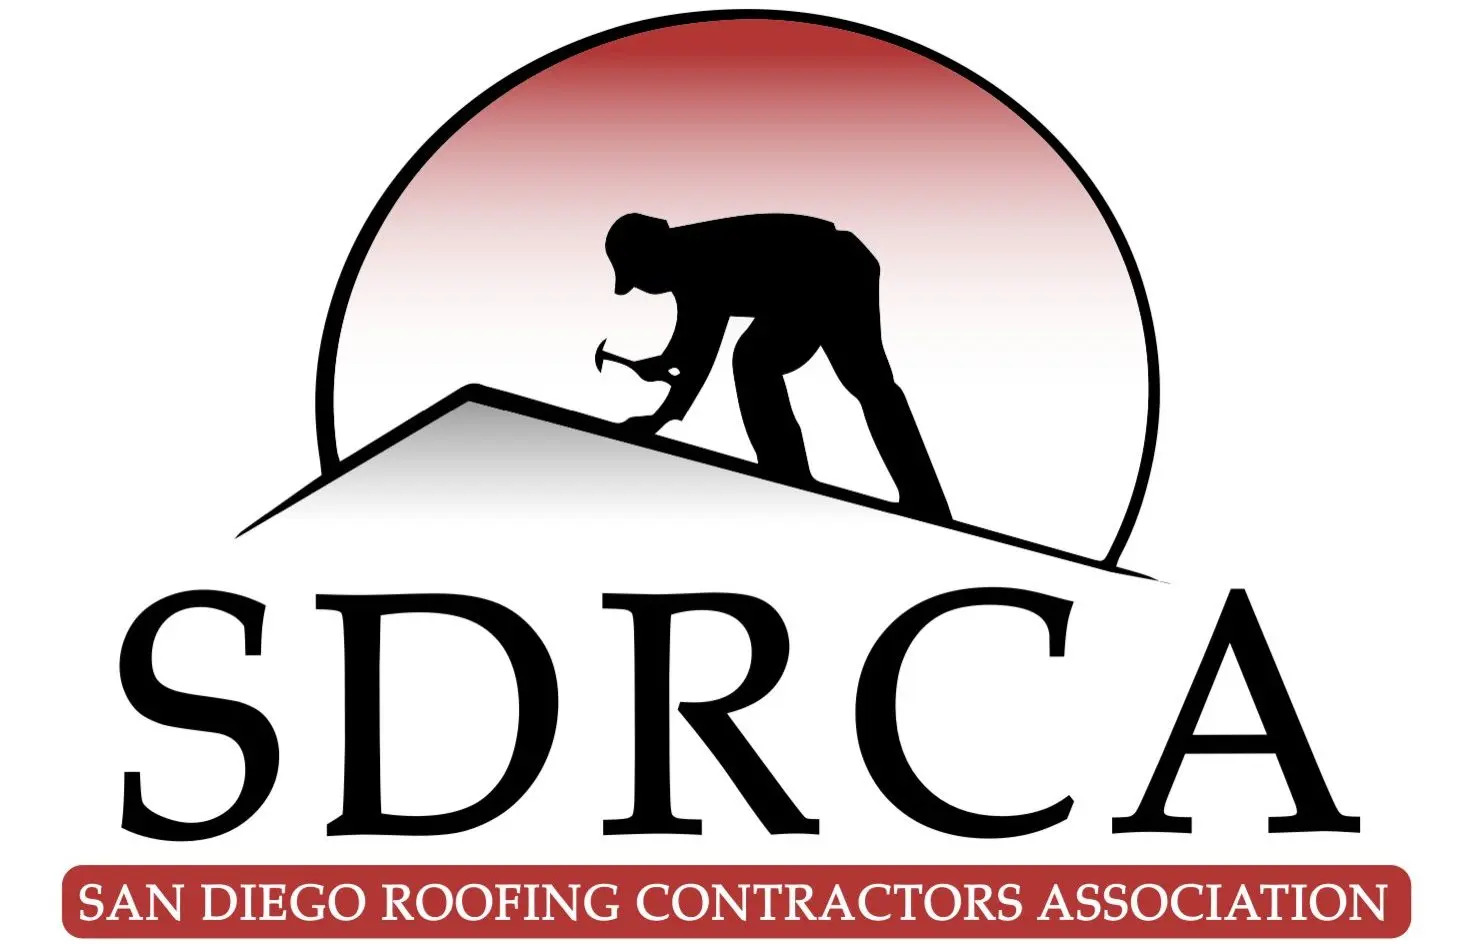 San Diego Roofing Contractors Association logo